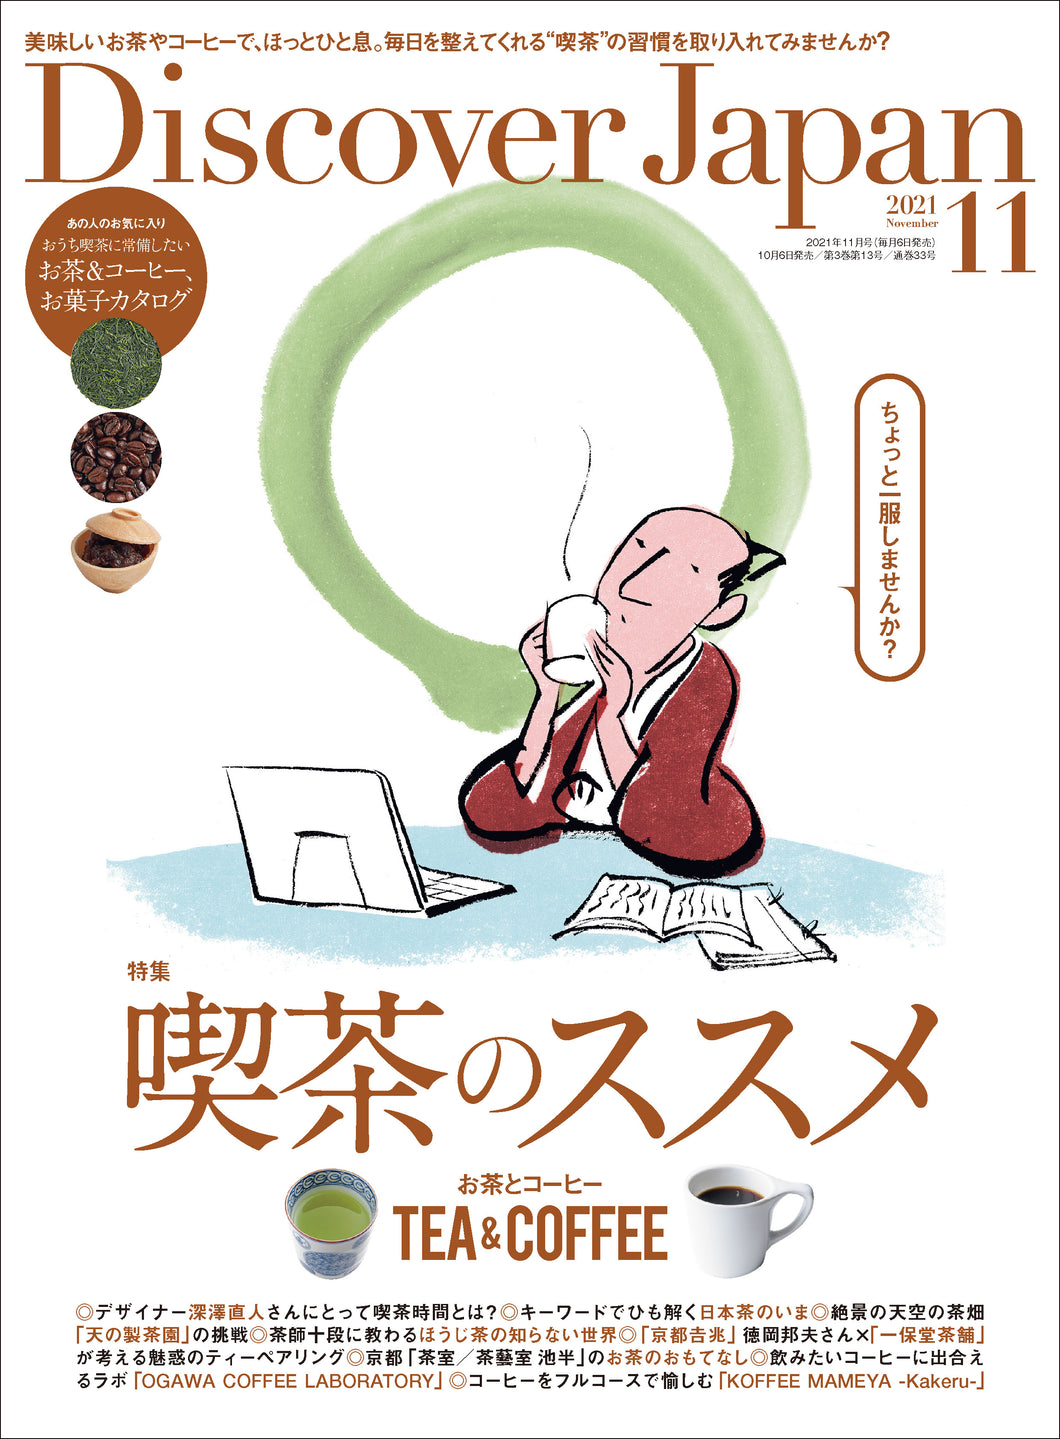 Discover Japan 2021年11月号「喫茶のススメ お茶とコーヒー」2021/10/6発売